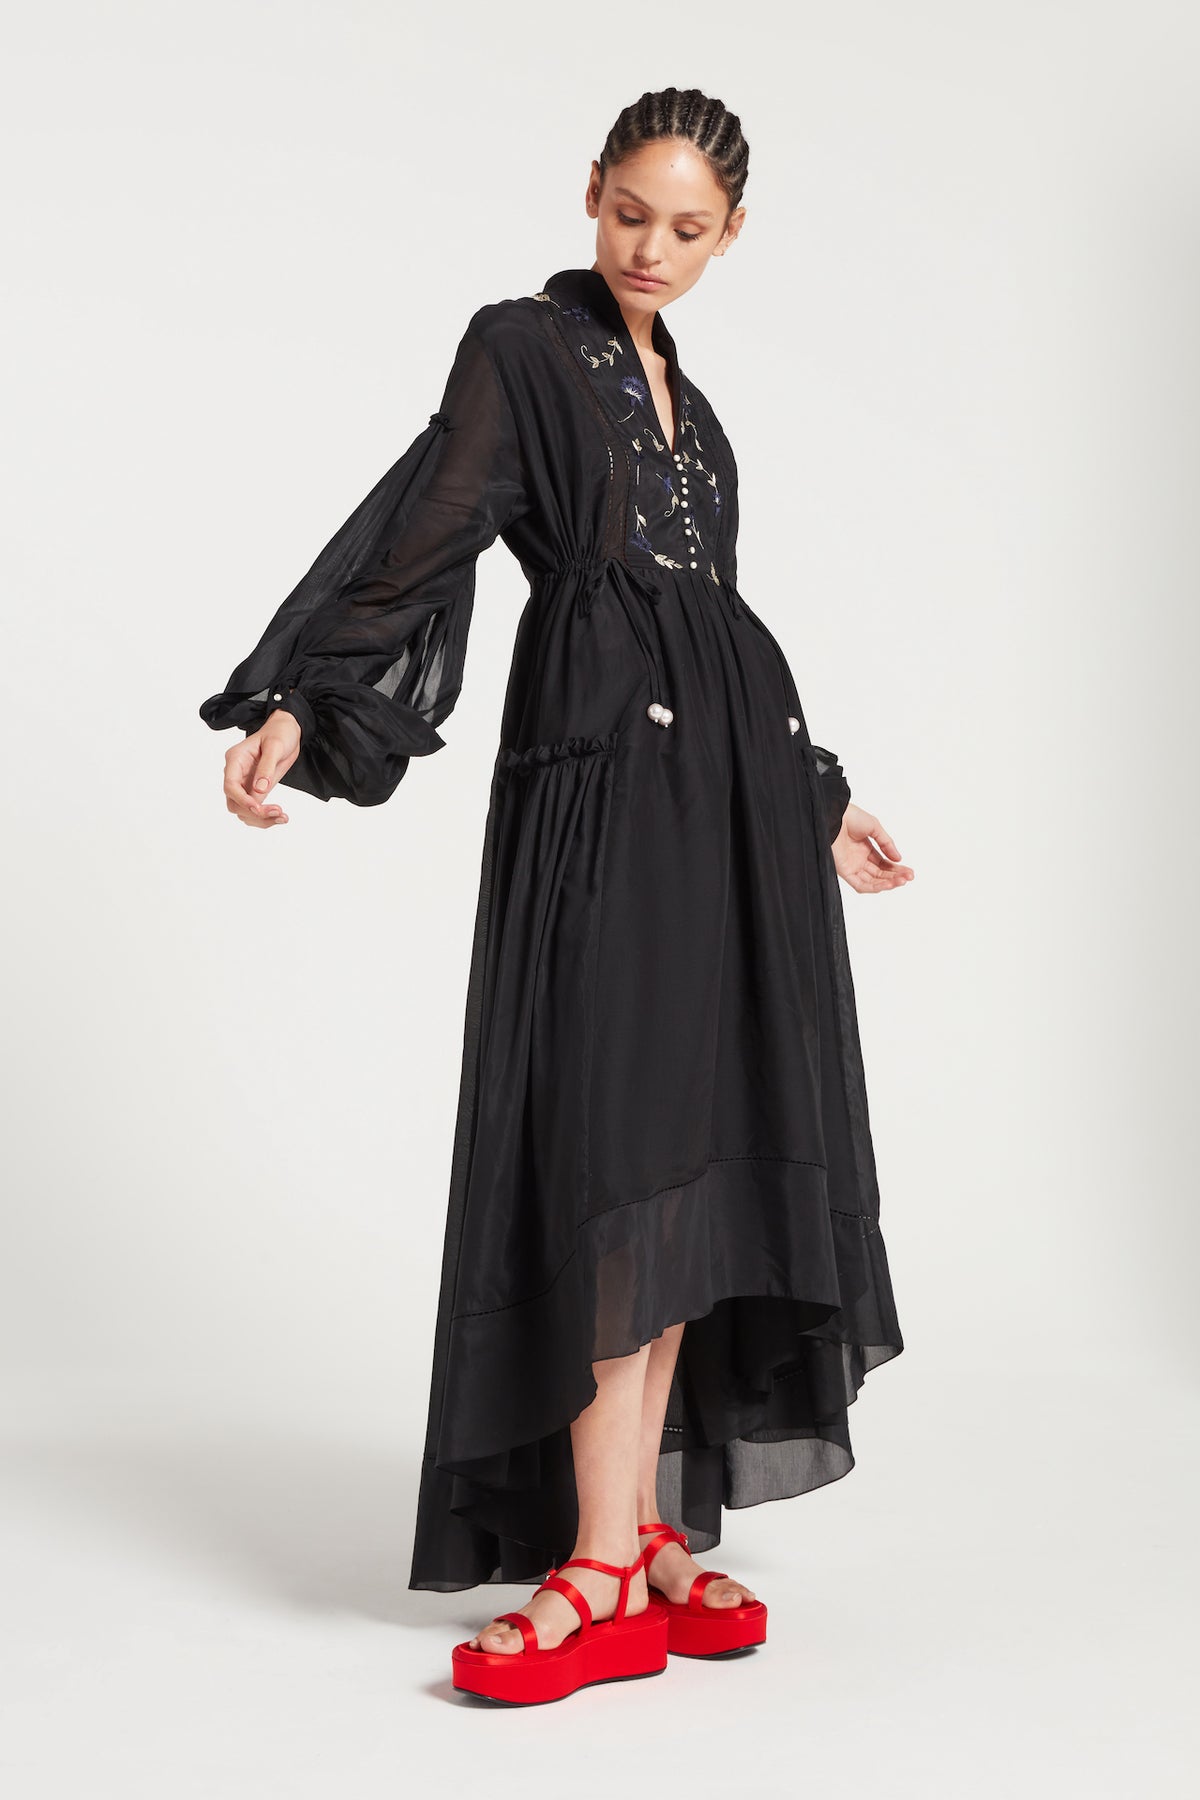 Juno Dress in Black| Noon by Noor